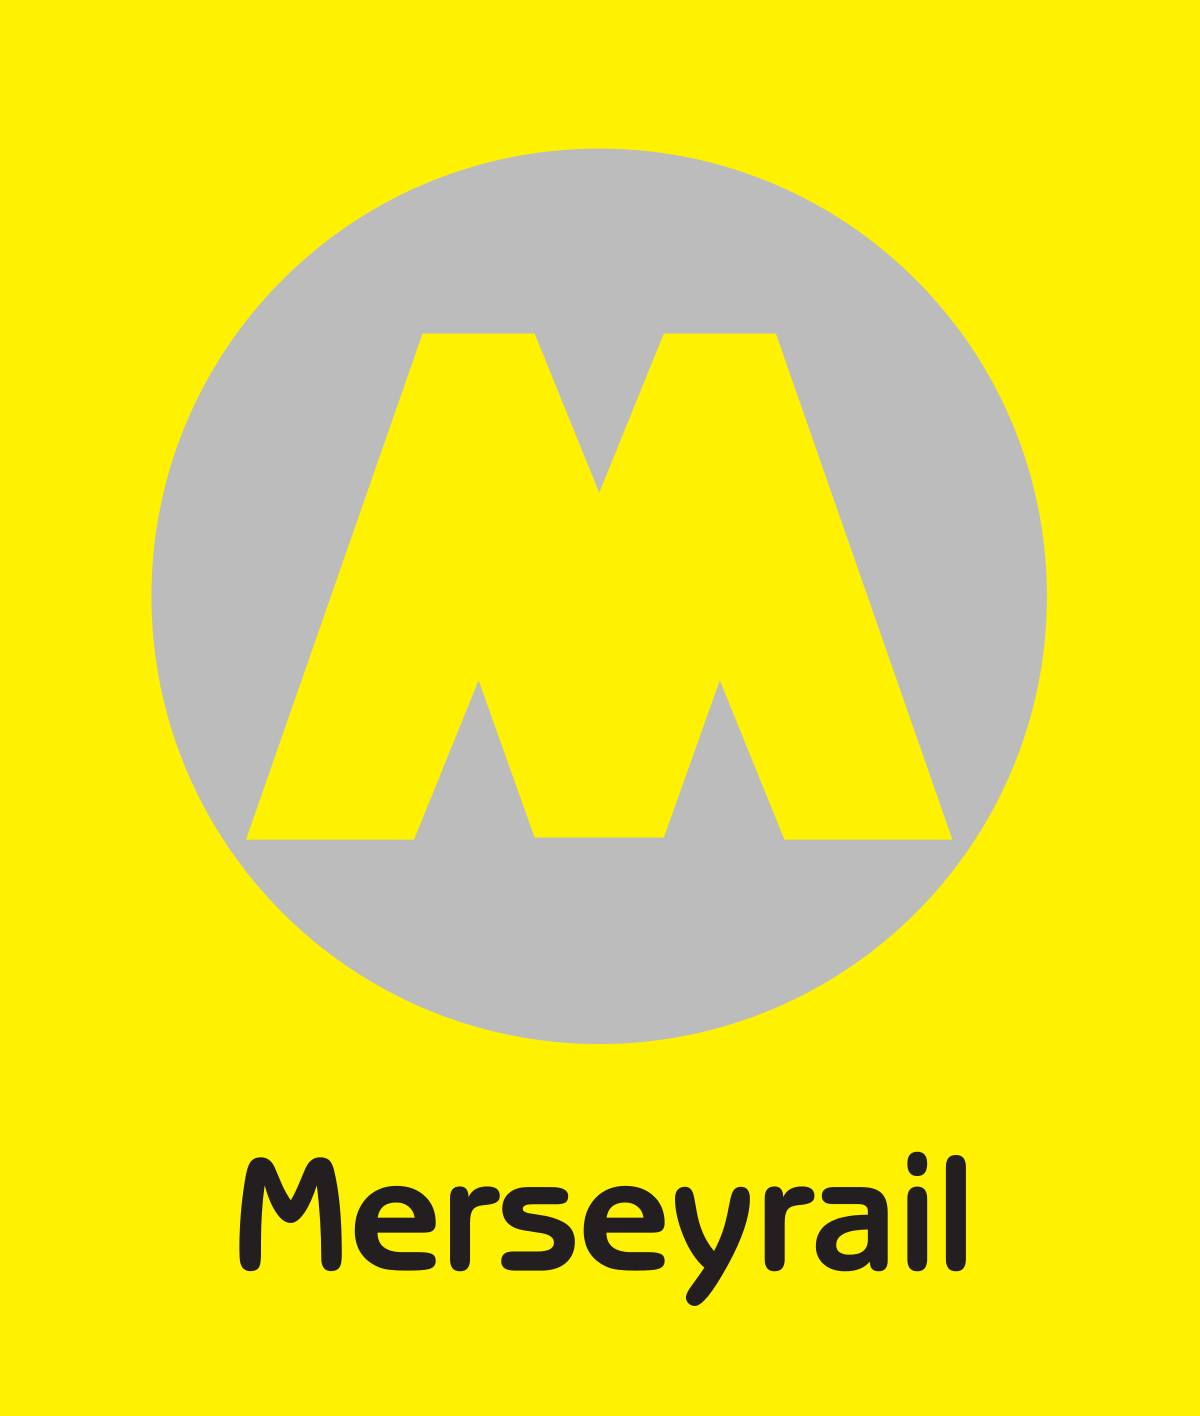 Mersey Rail logo